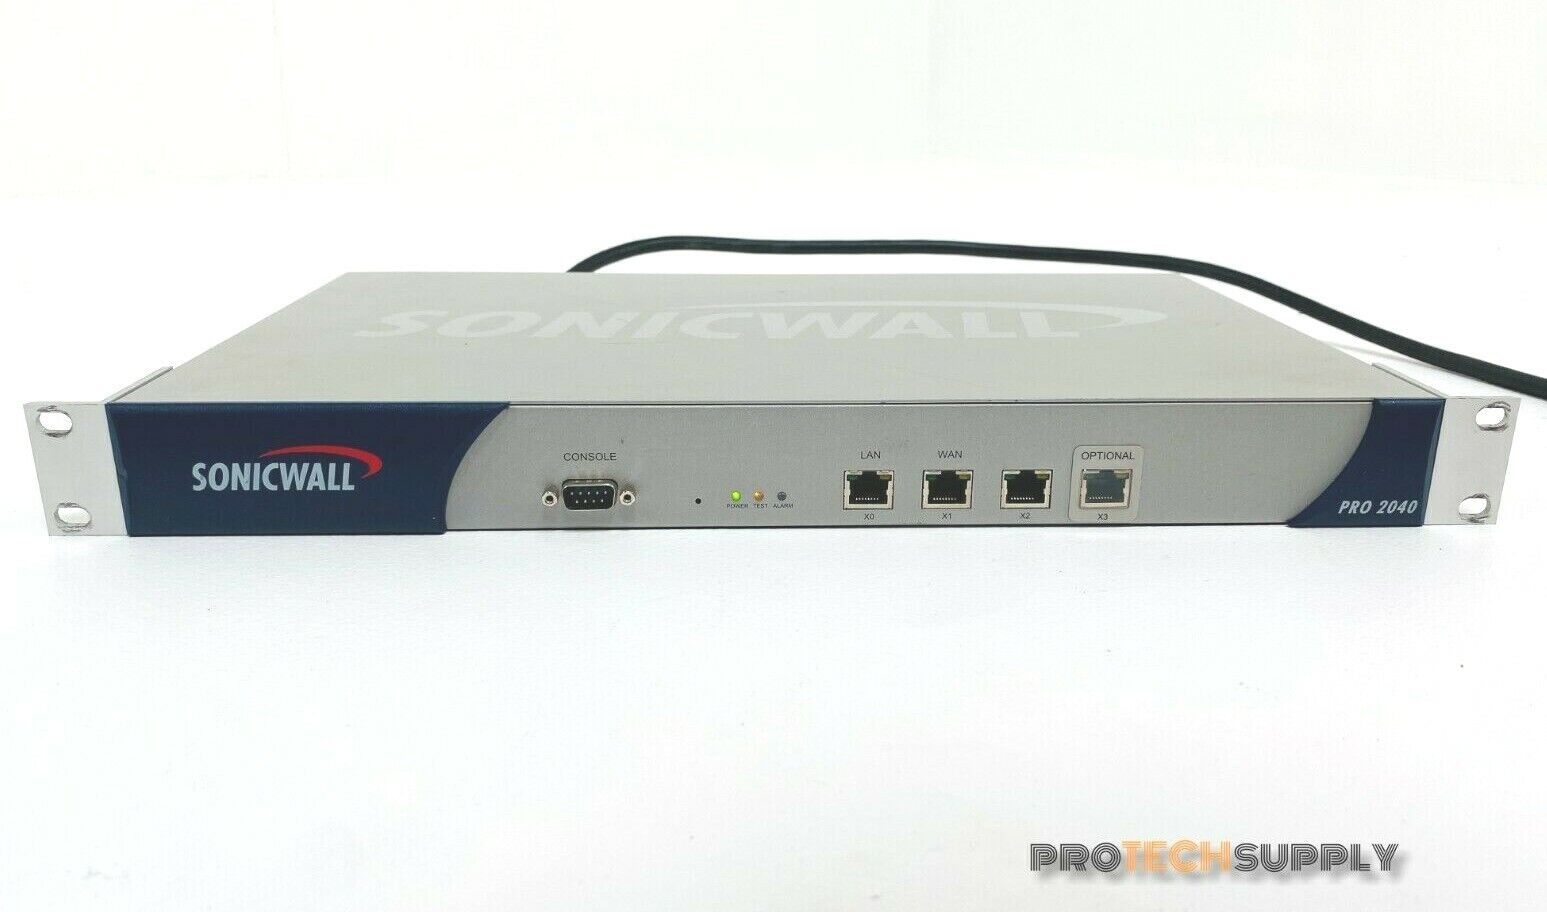 SonicWall PRO 2040 VPN Firewall Network Security Appliance with Warranty 